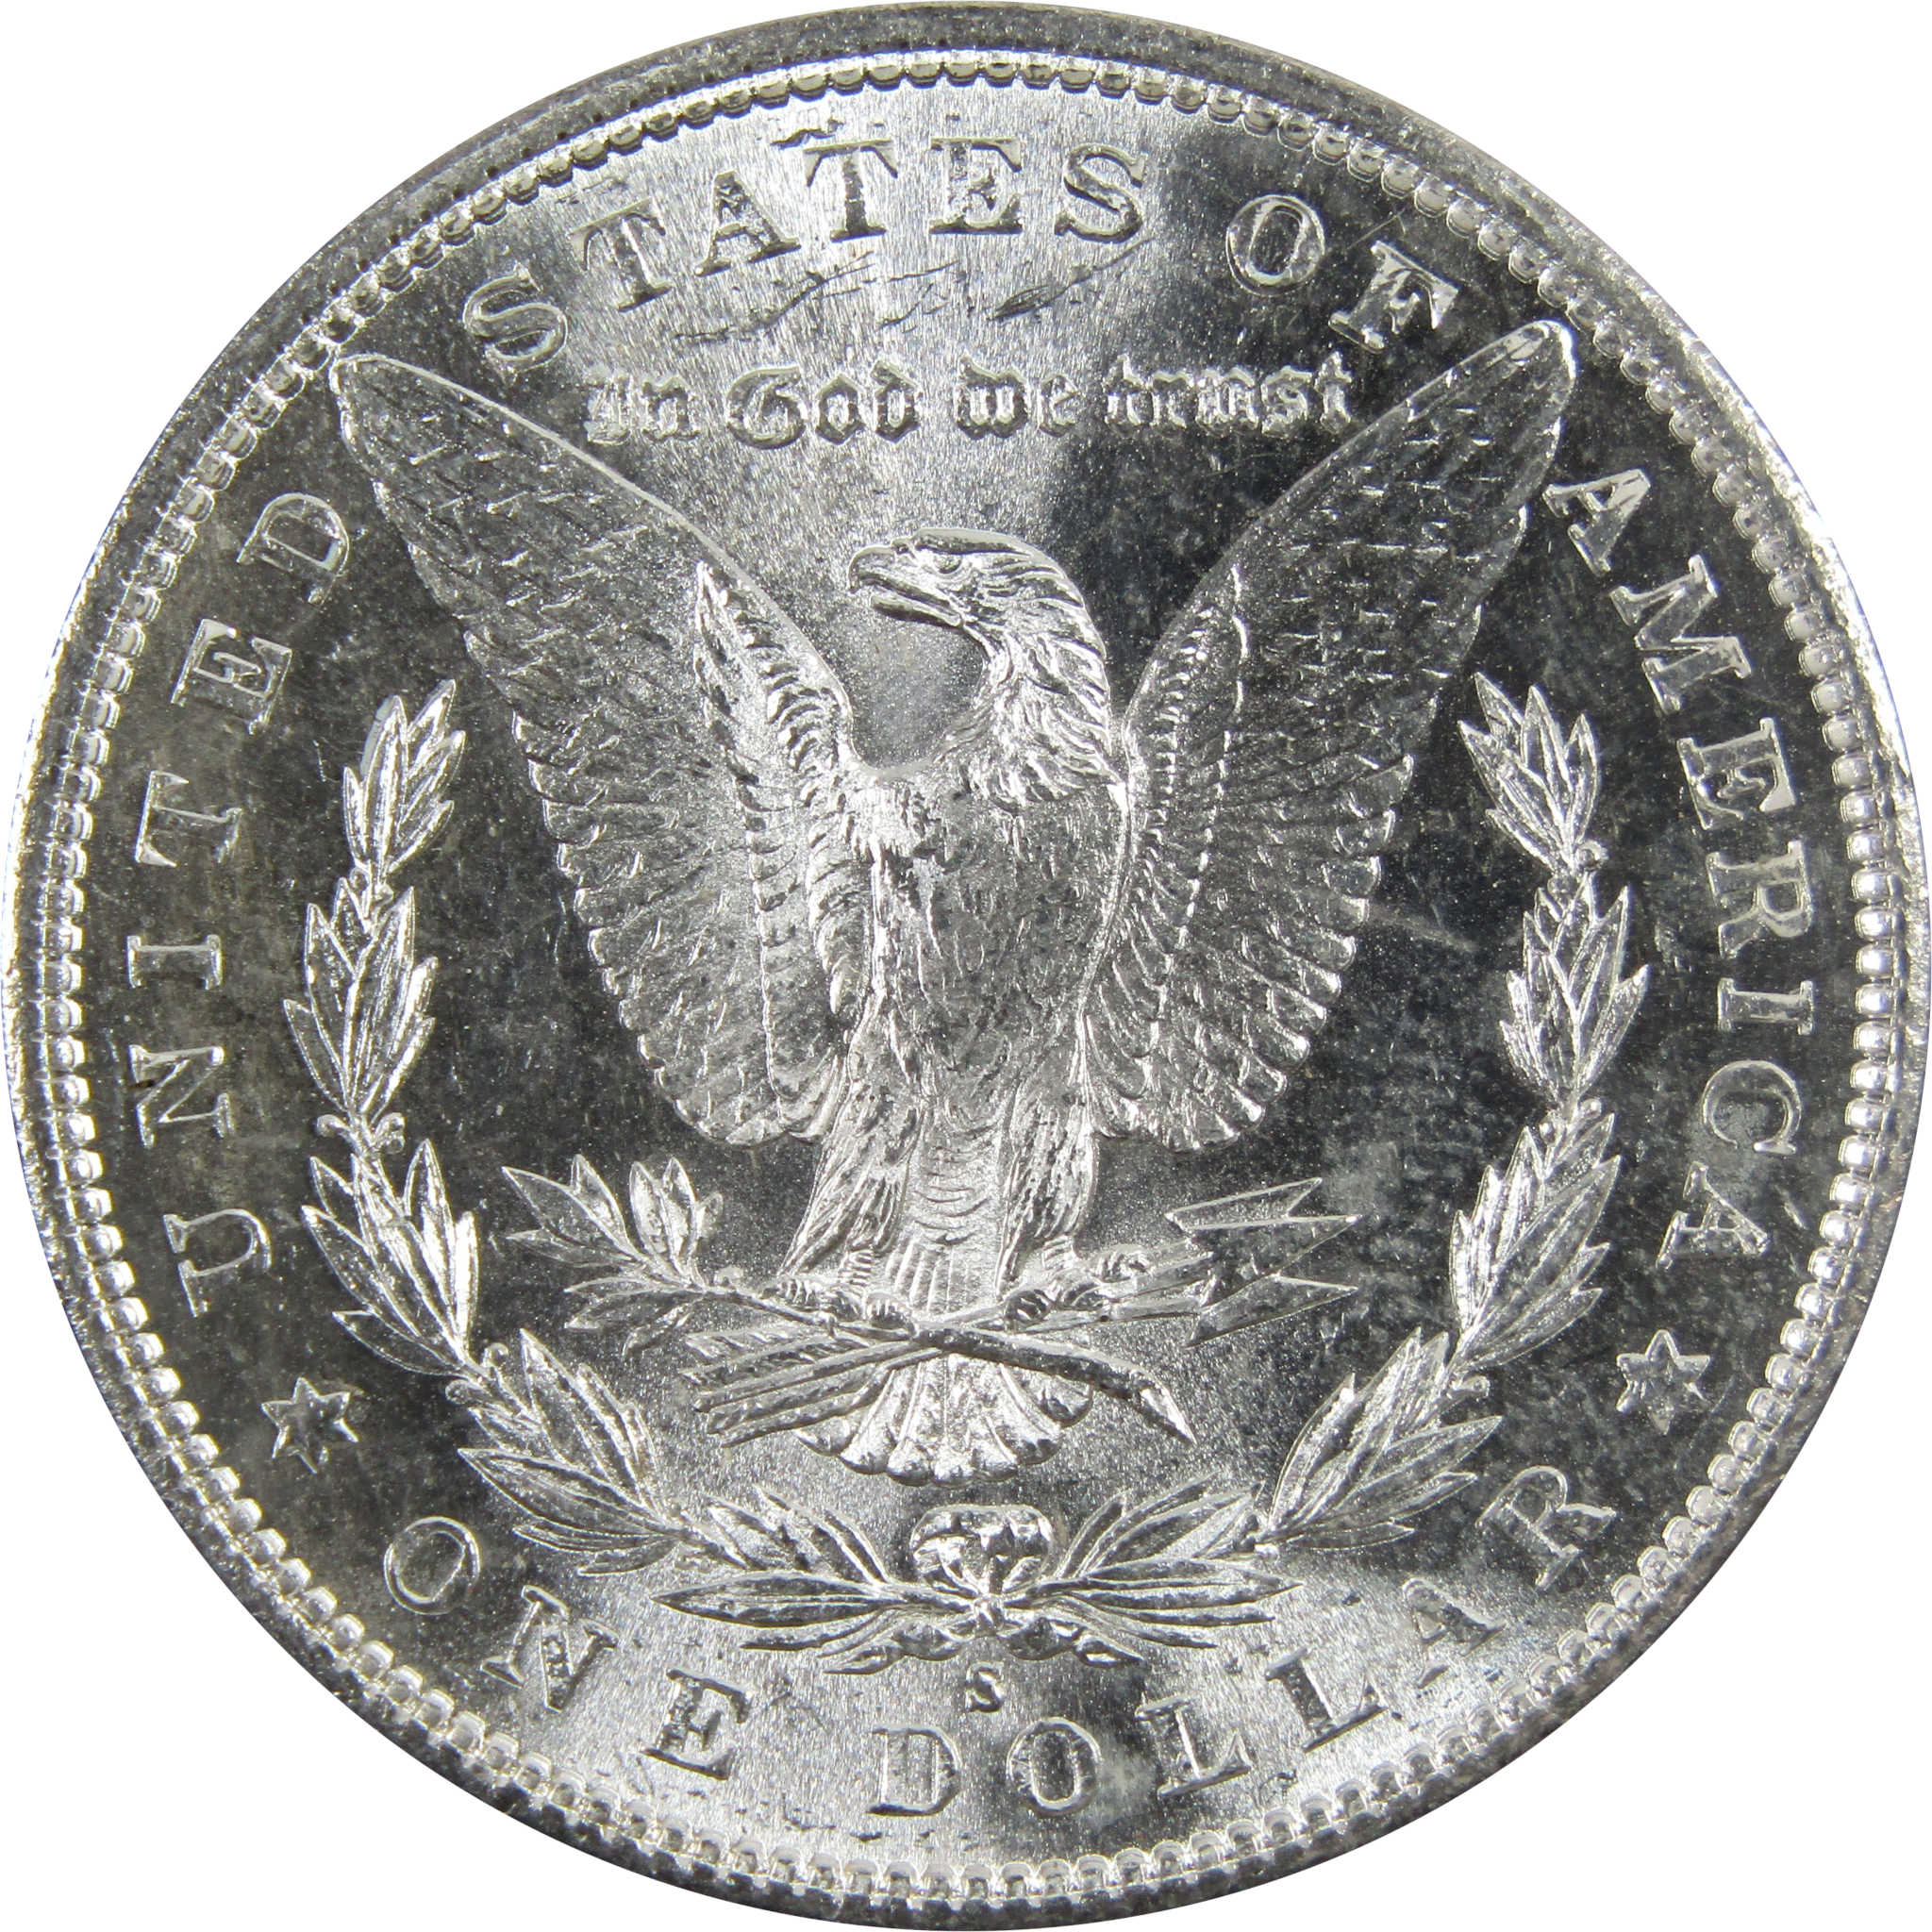 1881 S Morgan Dollar BU Uncirculated 90% Silver $1 Coin SKU:I5319 - Morgan coin - Morgan silver dollar - Morgan silver dollar for sale - Profile Coins &amp; Collectibles